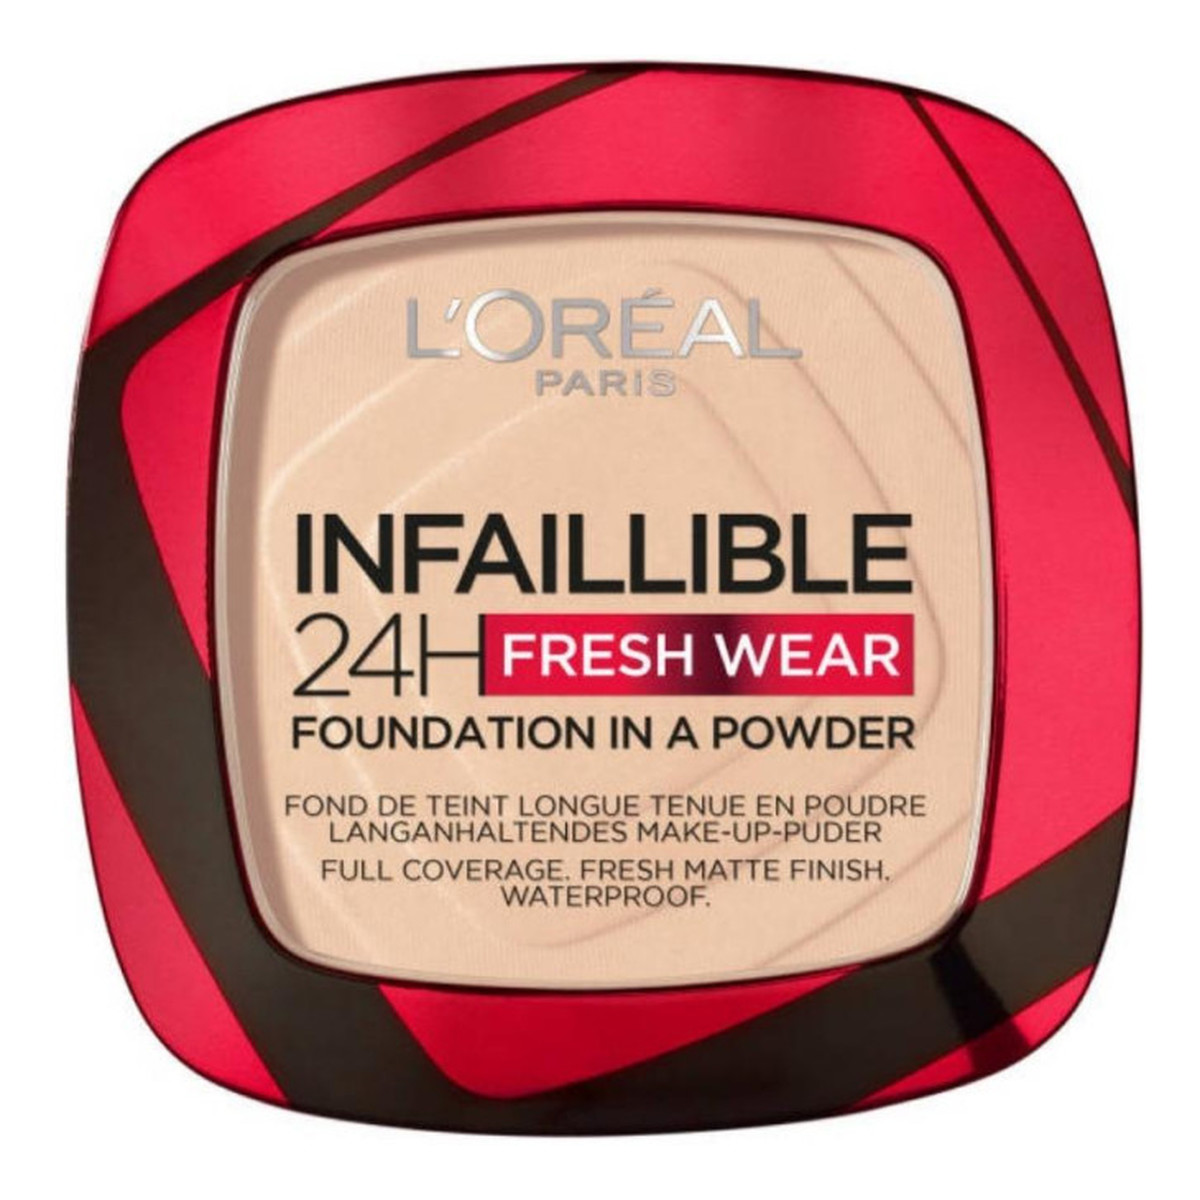 L'Oreal Paris Infaillible 24H Fresh Wear Foundation In A Powder matujący podkład do w pudrze 9g